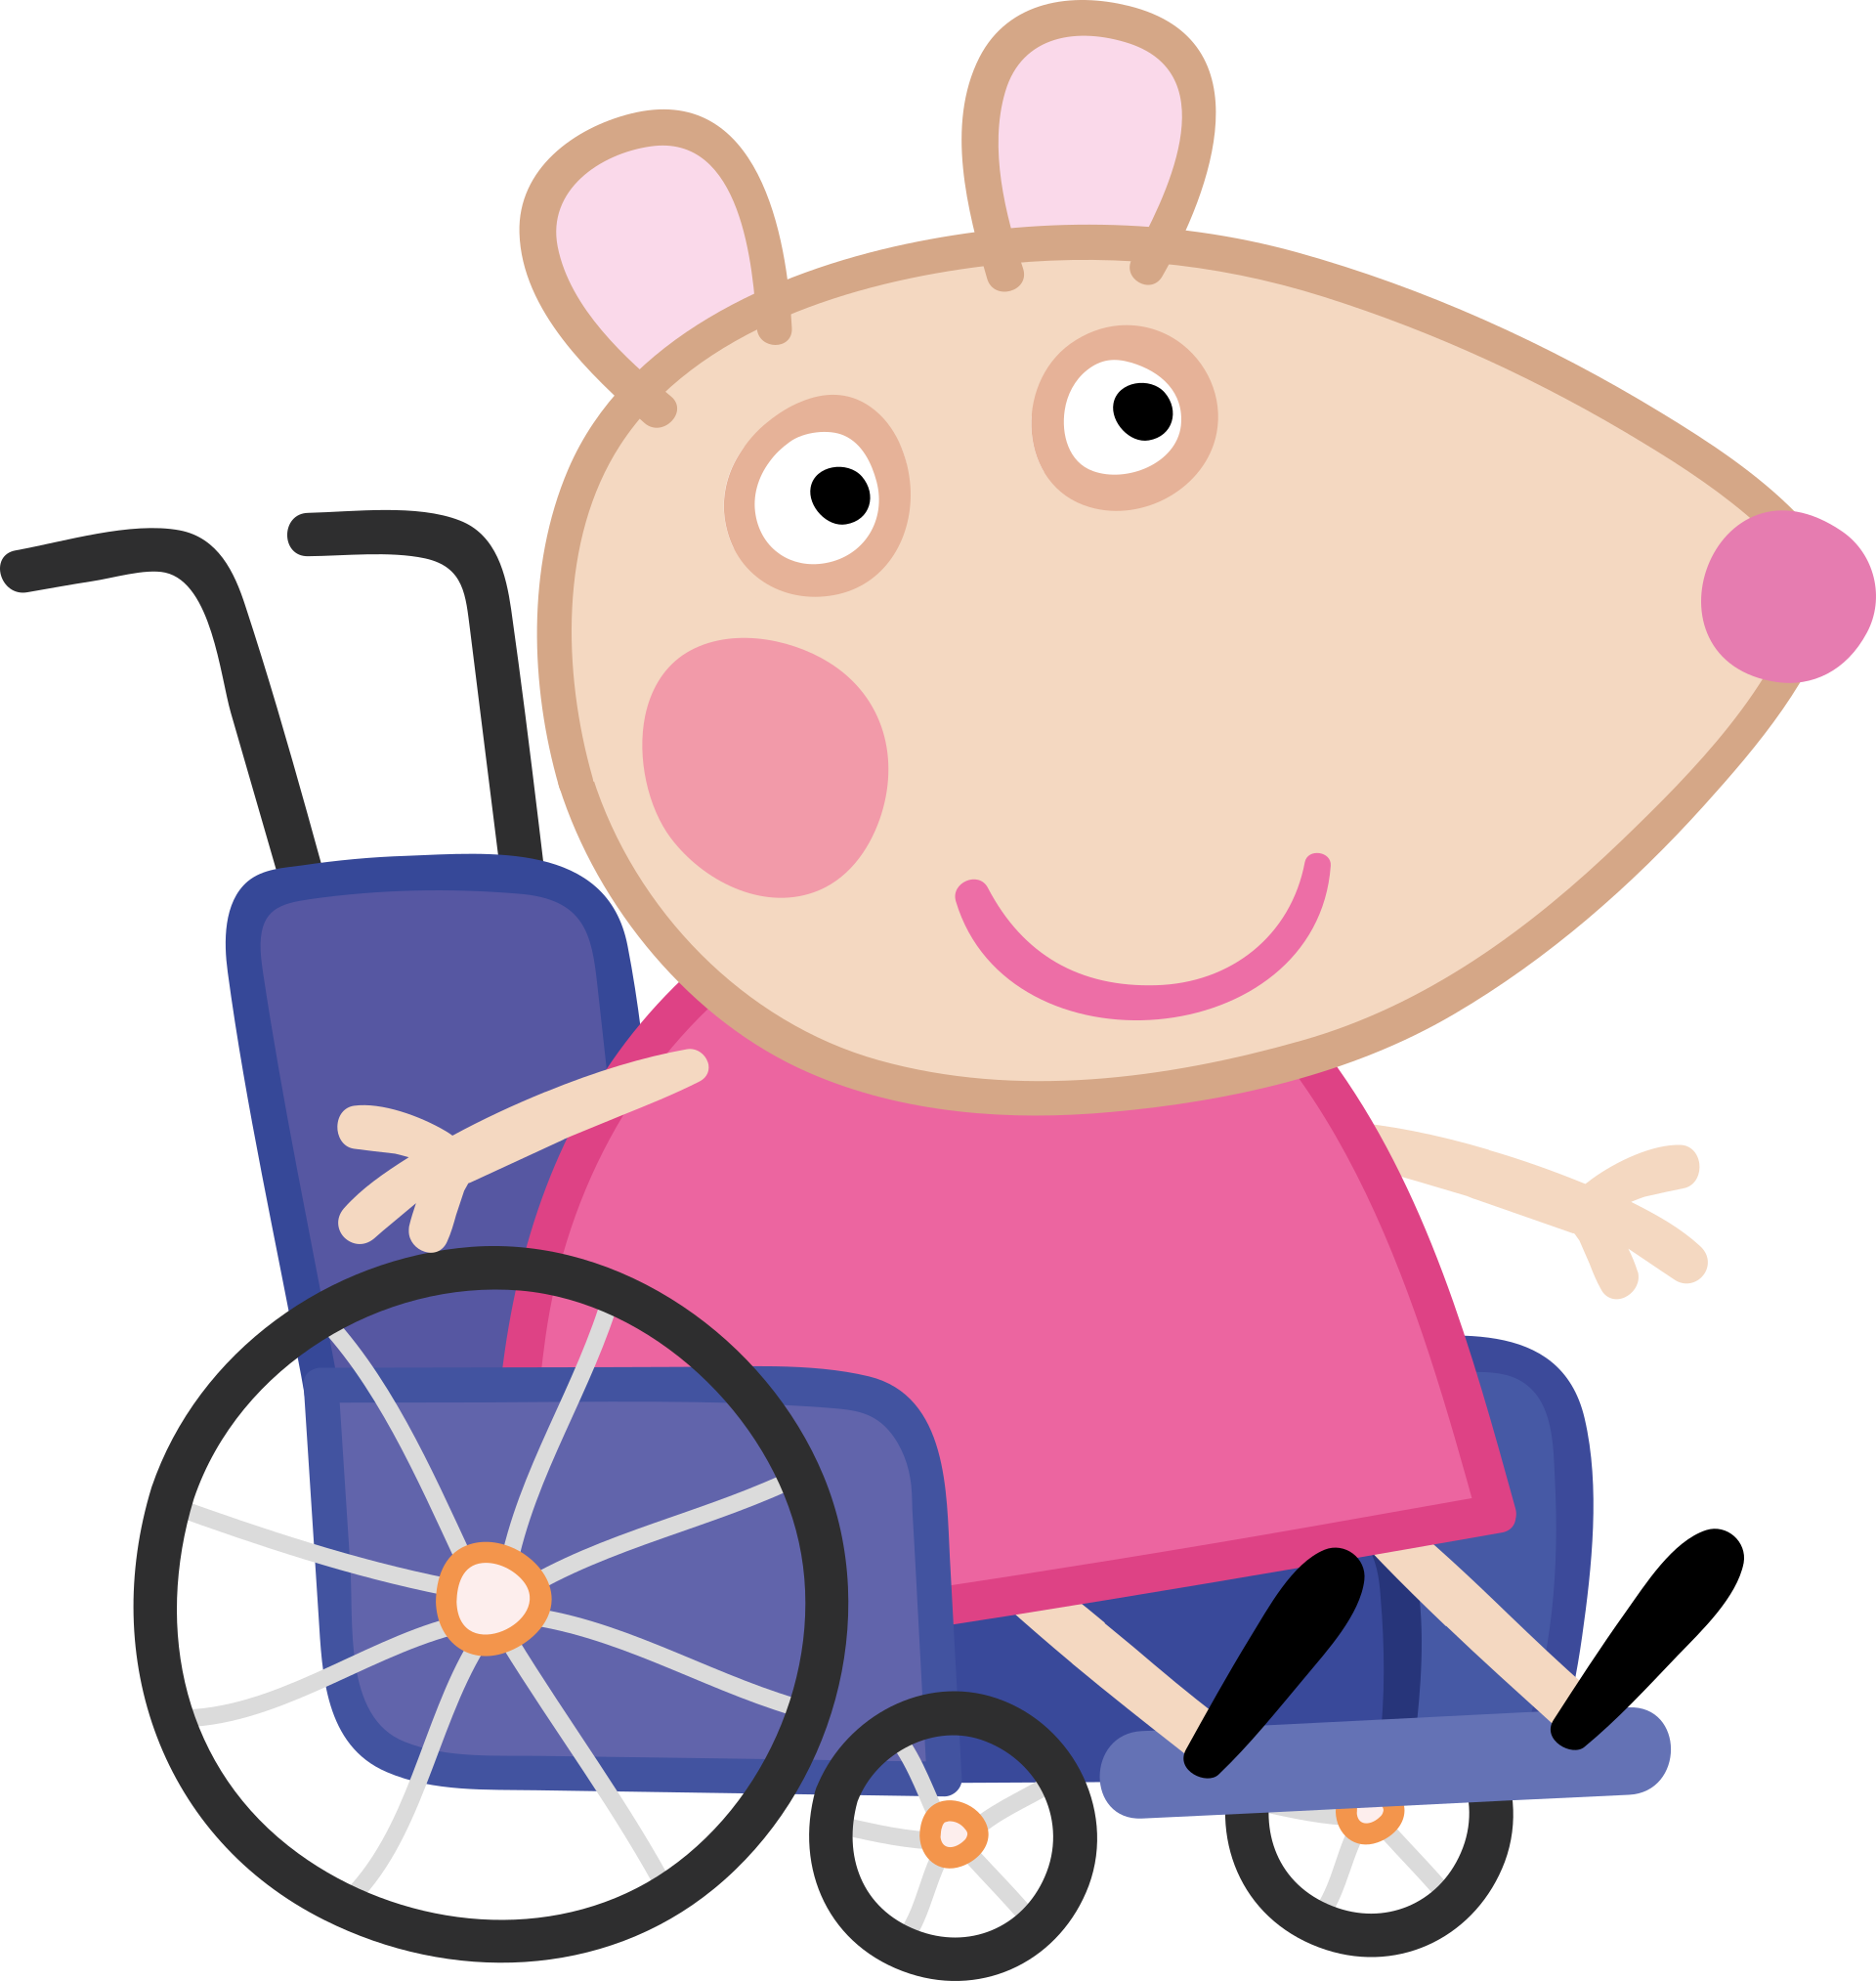 Mandy Mouse Character Peppa Pig Wiki Fandom - rebecca rabbit peppa rebecca rabbit roblox piggy characters